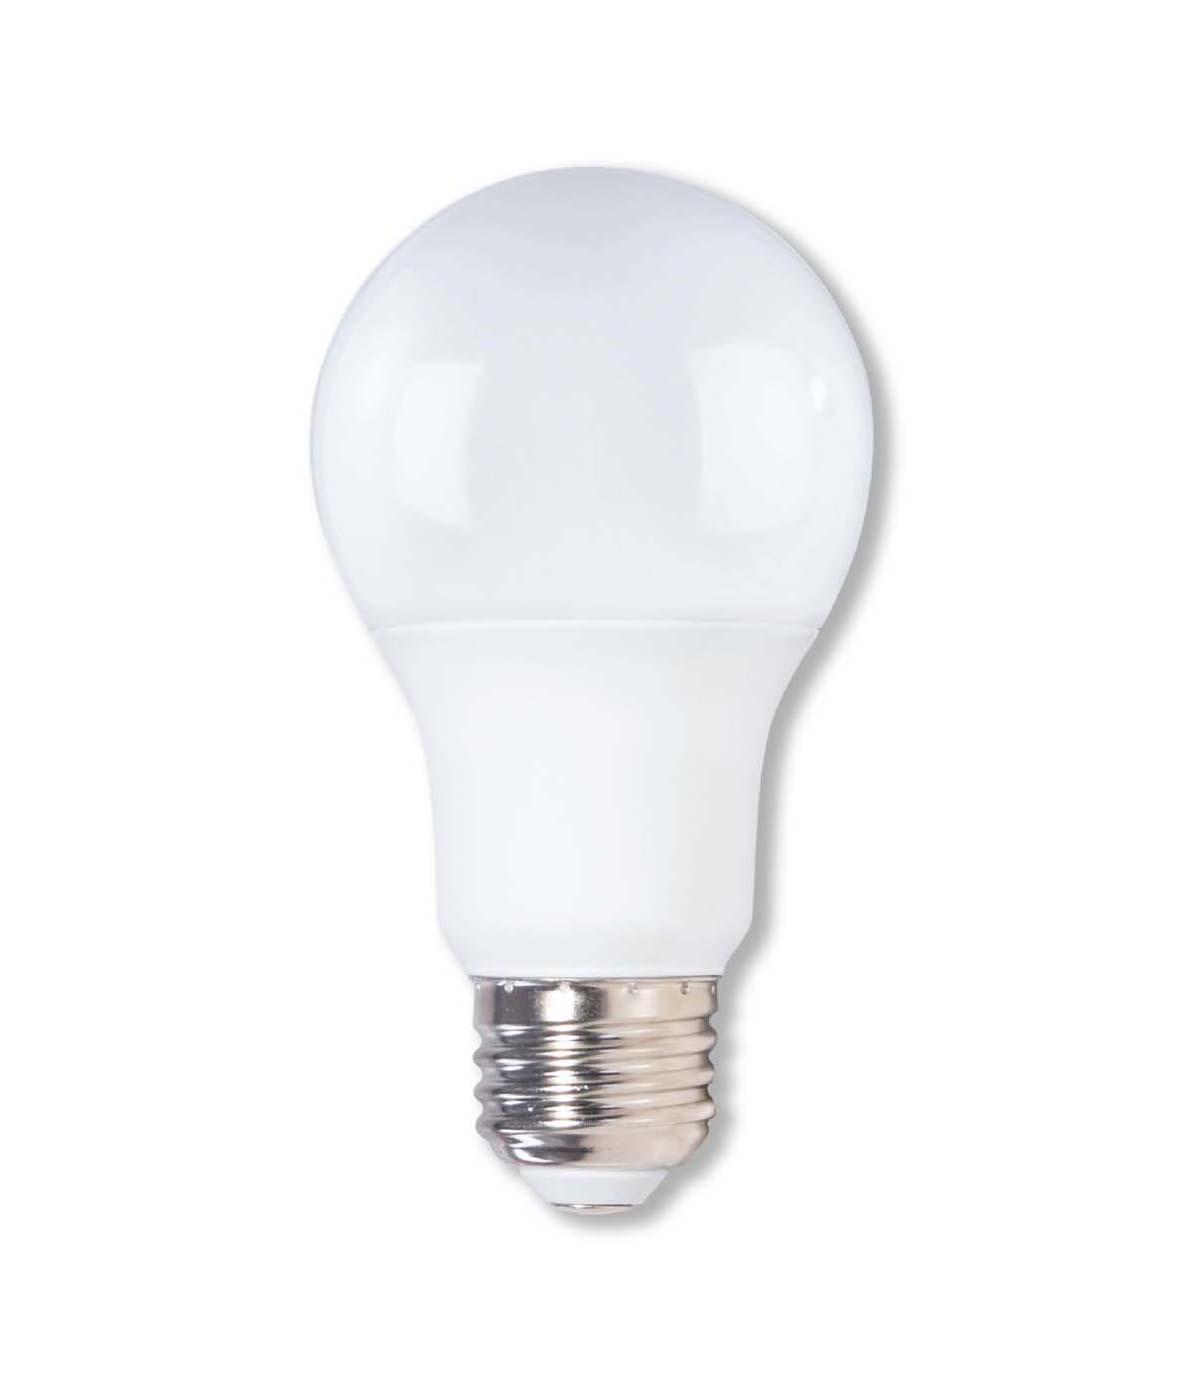 H-E-B A19 100-Watt LED Light Bulbs - Bright White; image 2 of 2